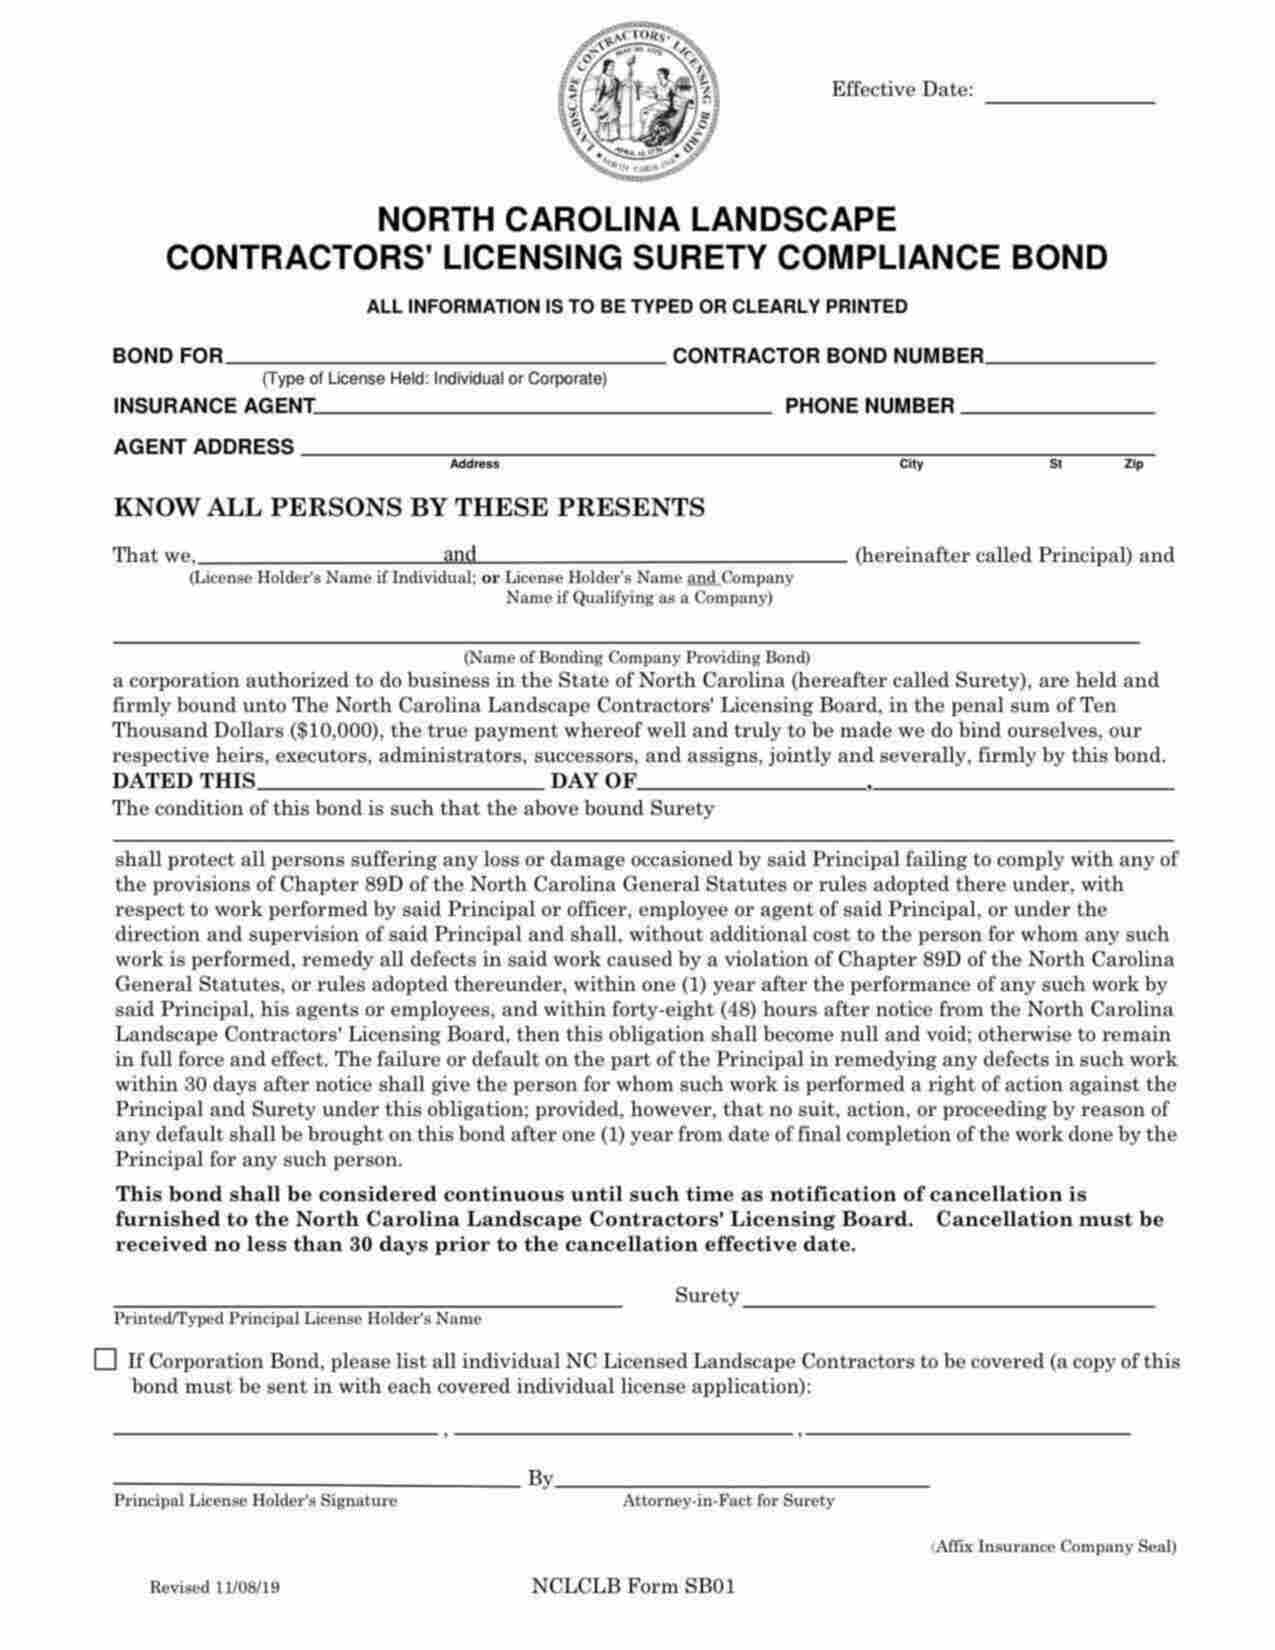 North Carolina Landscape Contractor's License - Corporation Bond Form